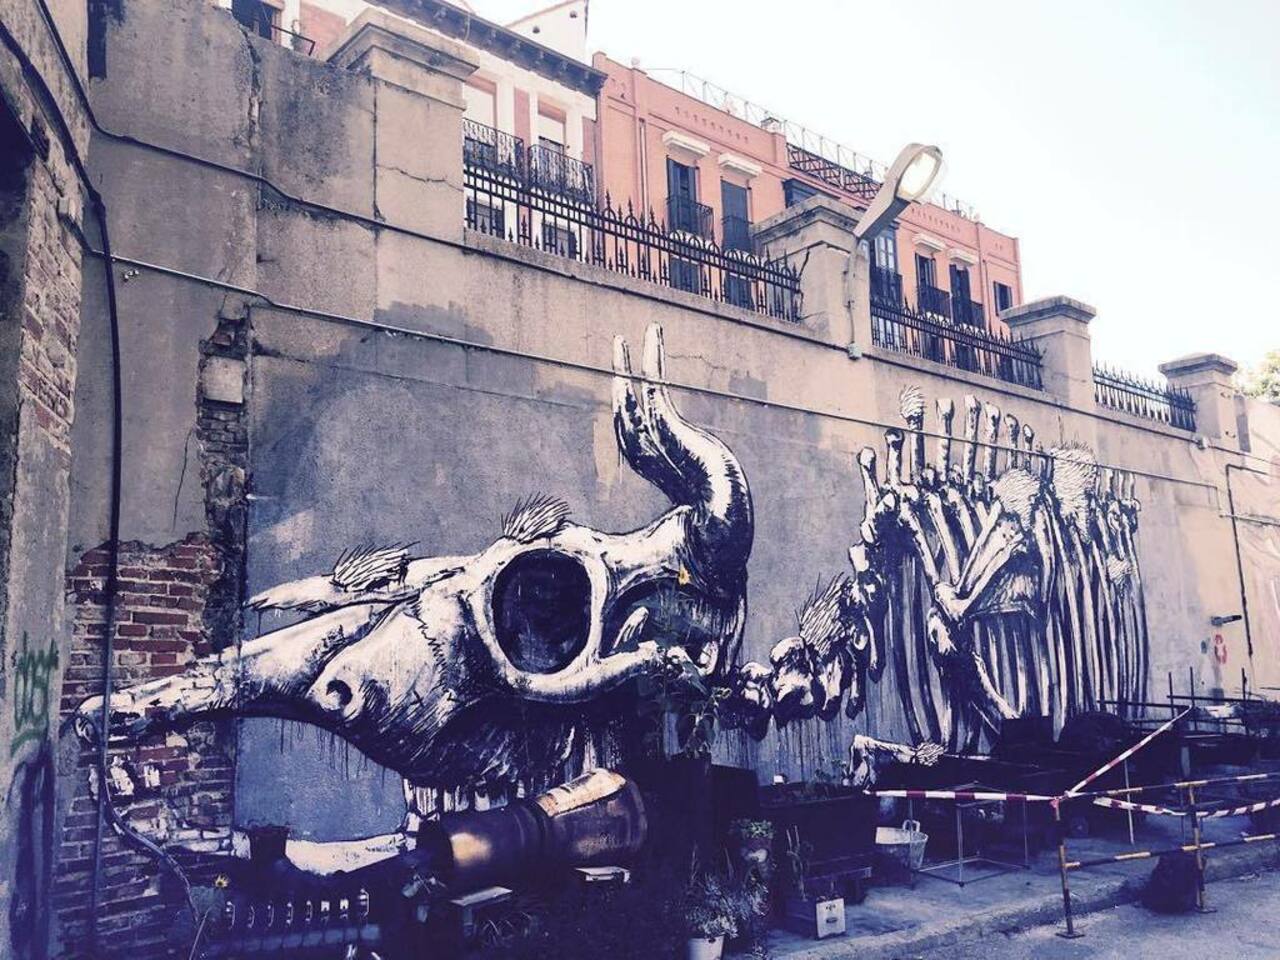 RT @StArtEverywhere: #streetart #streetartmadrid #tabacalera #graffiti #graffitiart #artwork by shock4fashion http://t.co/AUZ77O176c